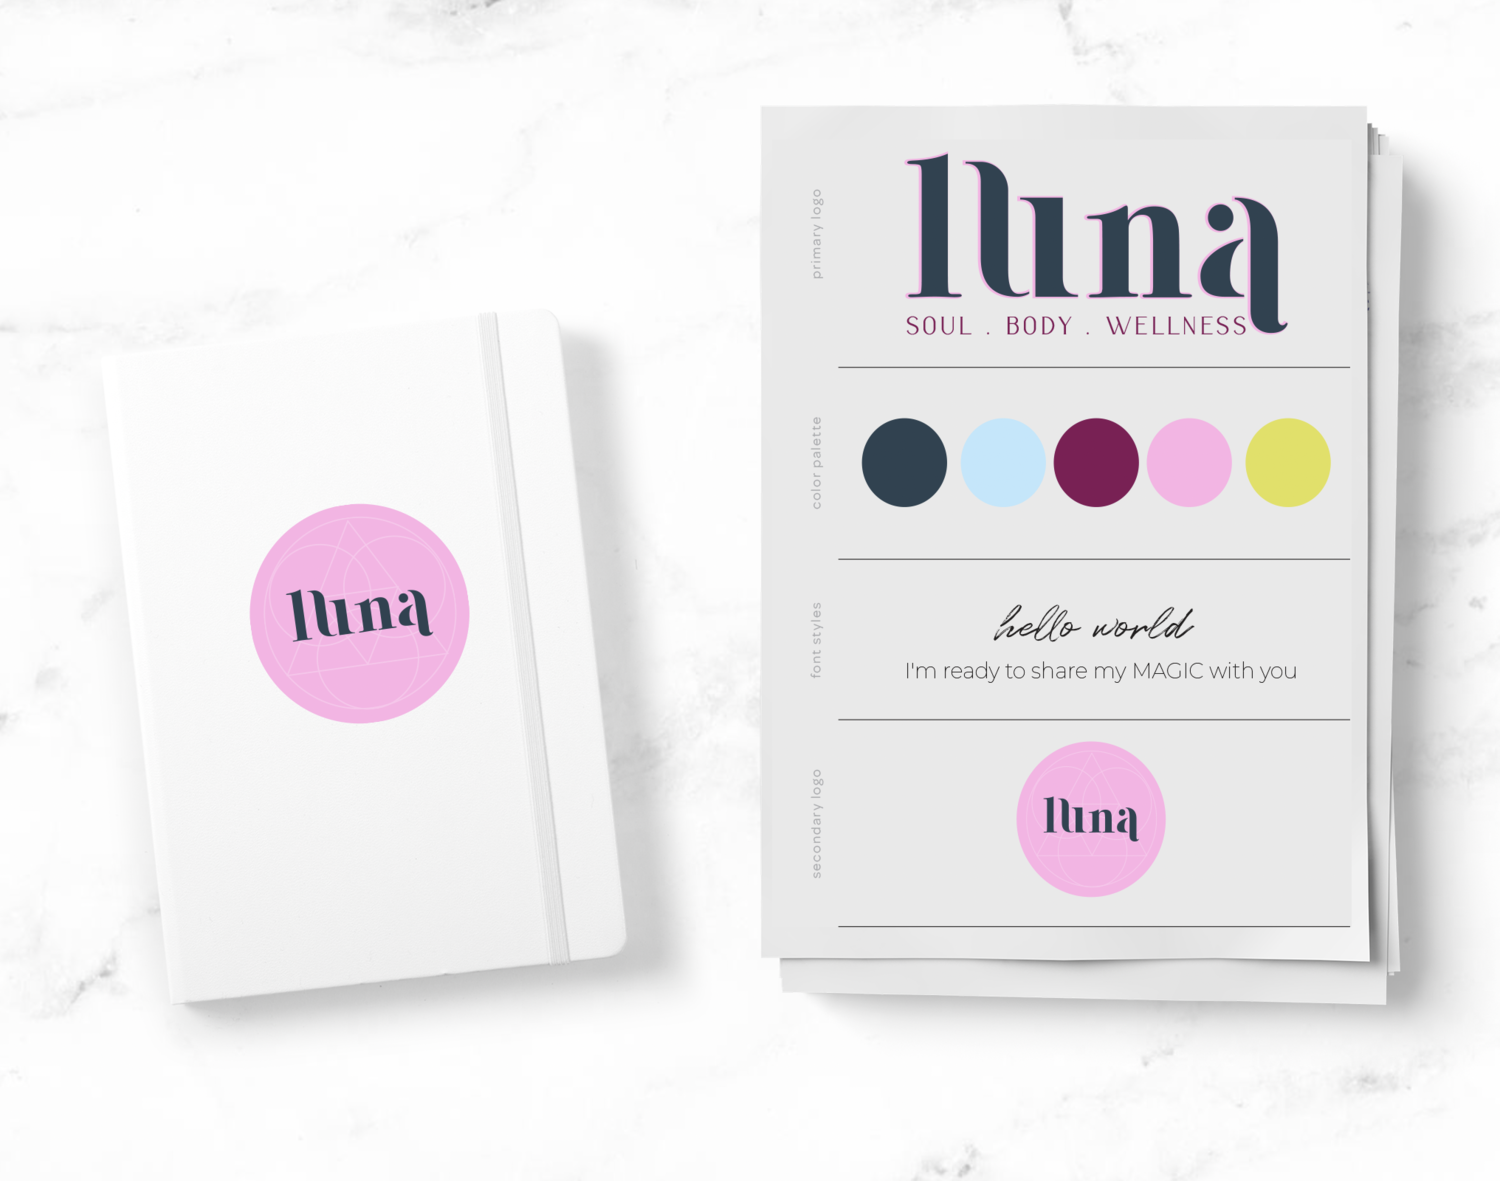 luna-spiritual-coach-design-healer-mentor-logo-design-brand-kit-soulful111 (1).png